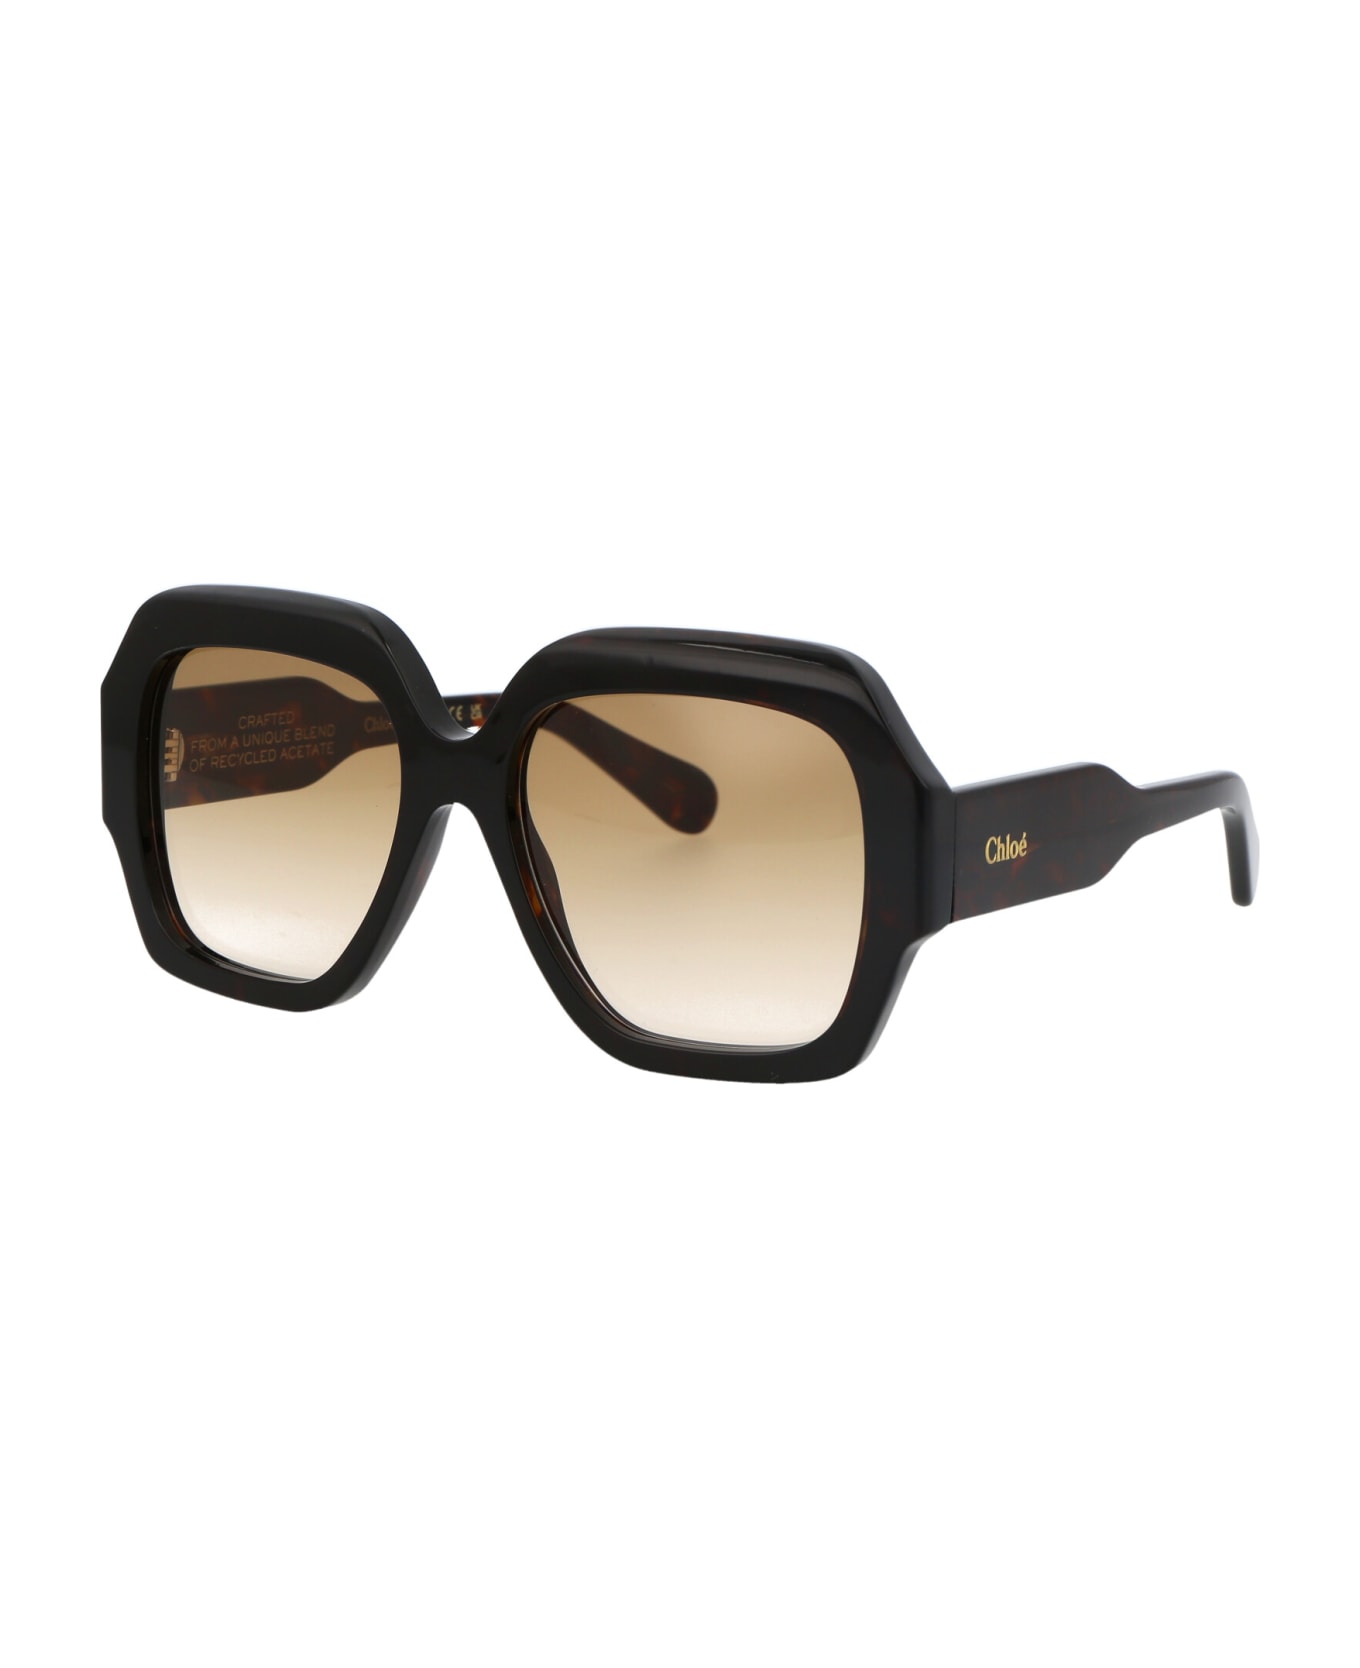 Chloé Eyewear Ch0154s Sunglasses - 002 HAVANA HAVANA BROWN サングラス